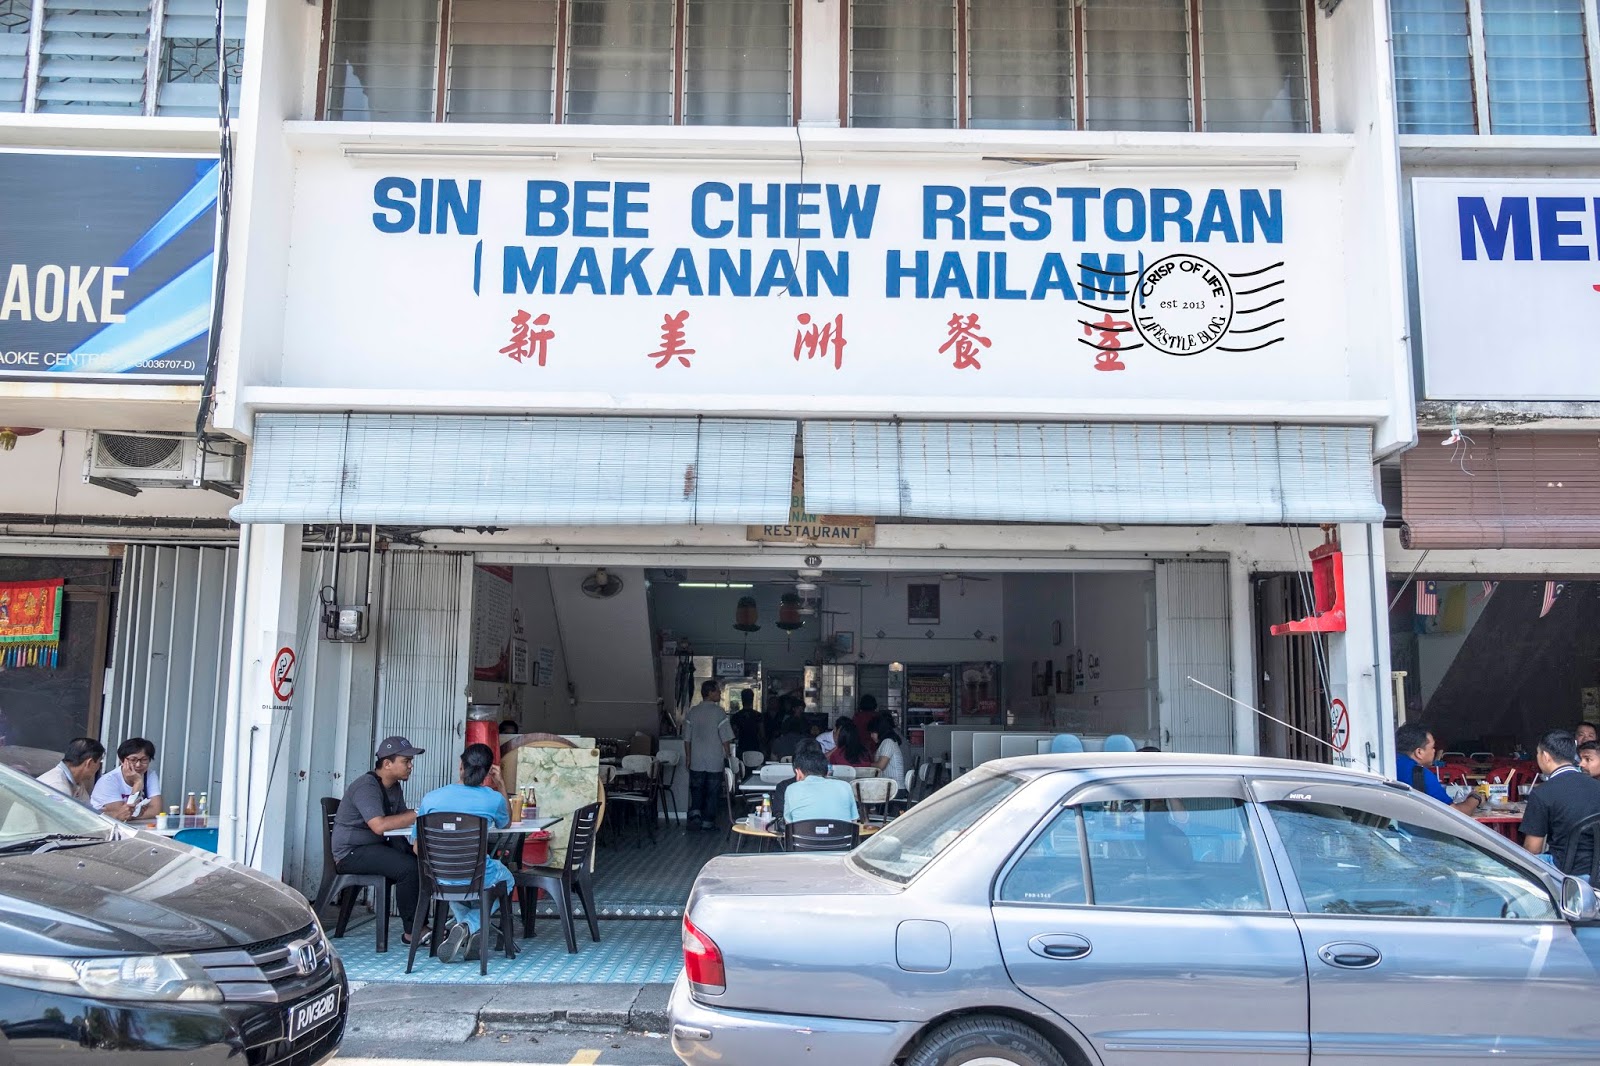 Sin Bee Chew Restaurant Hailam Food 新美州餐室海南餐 at Bagan Luar, Butterworth, Penang